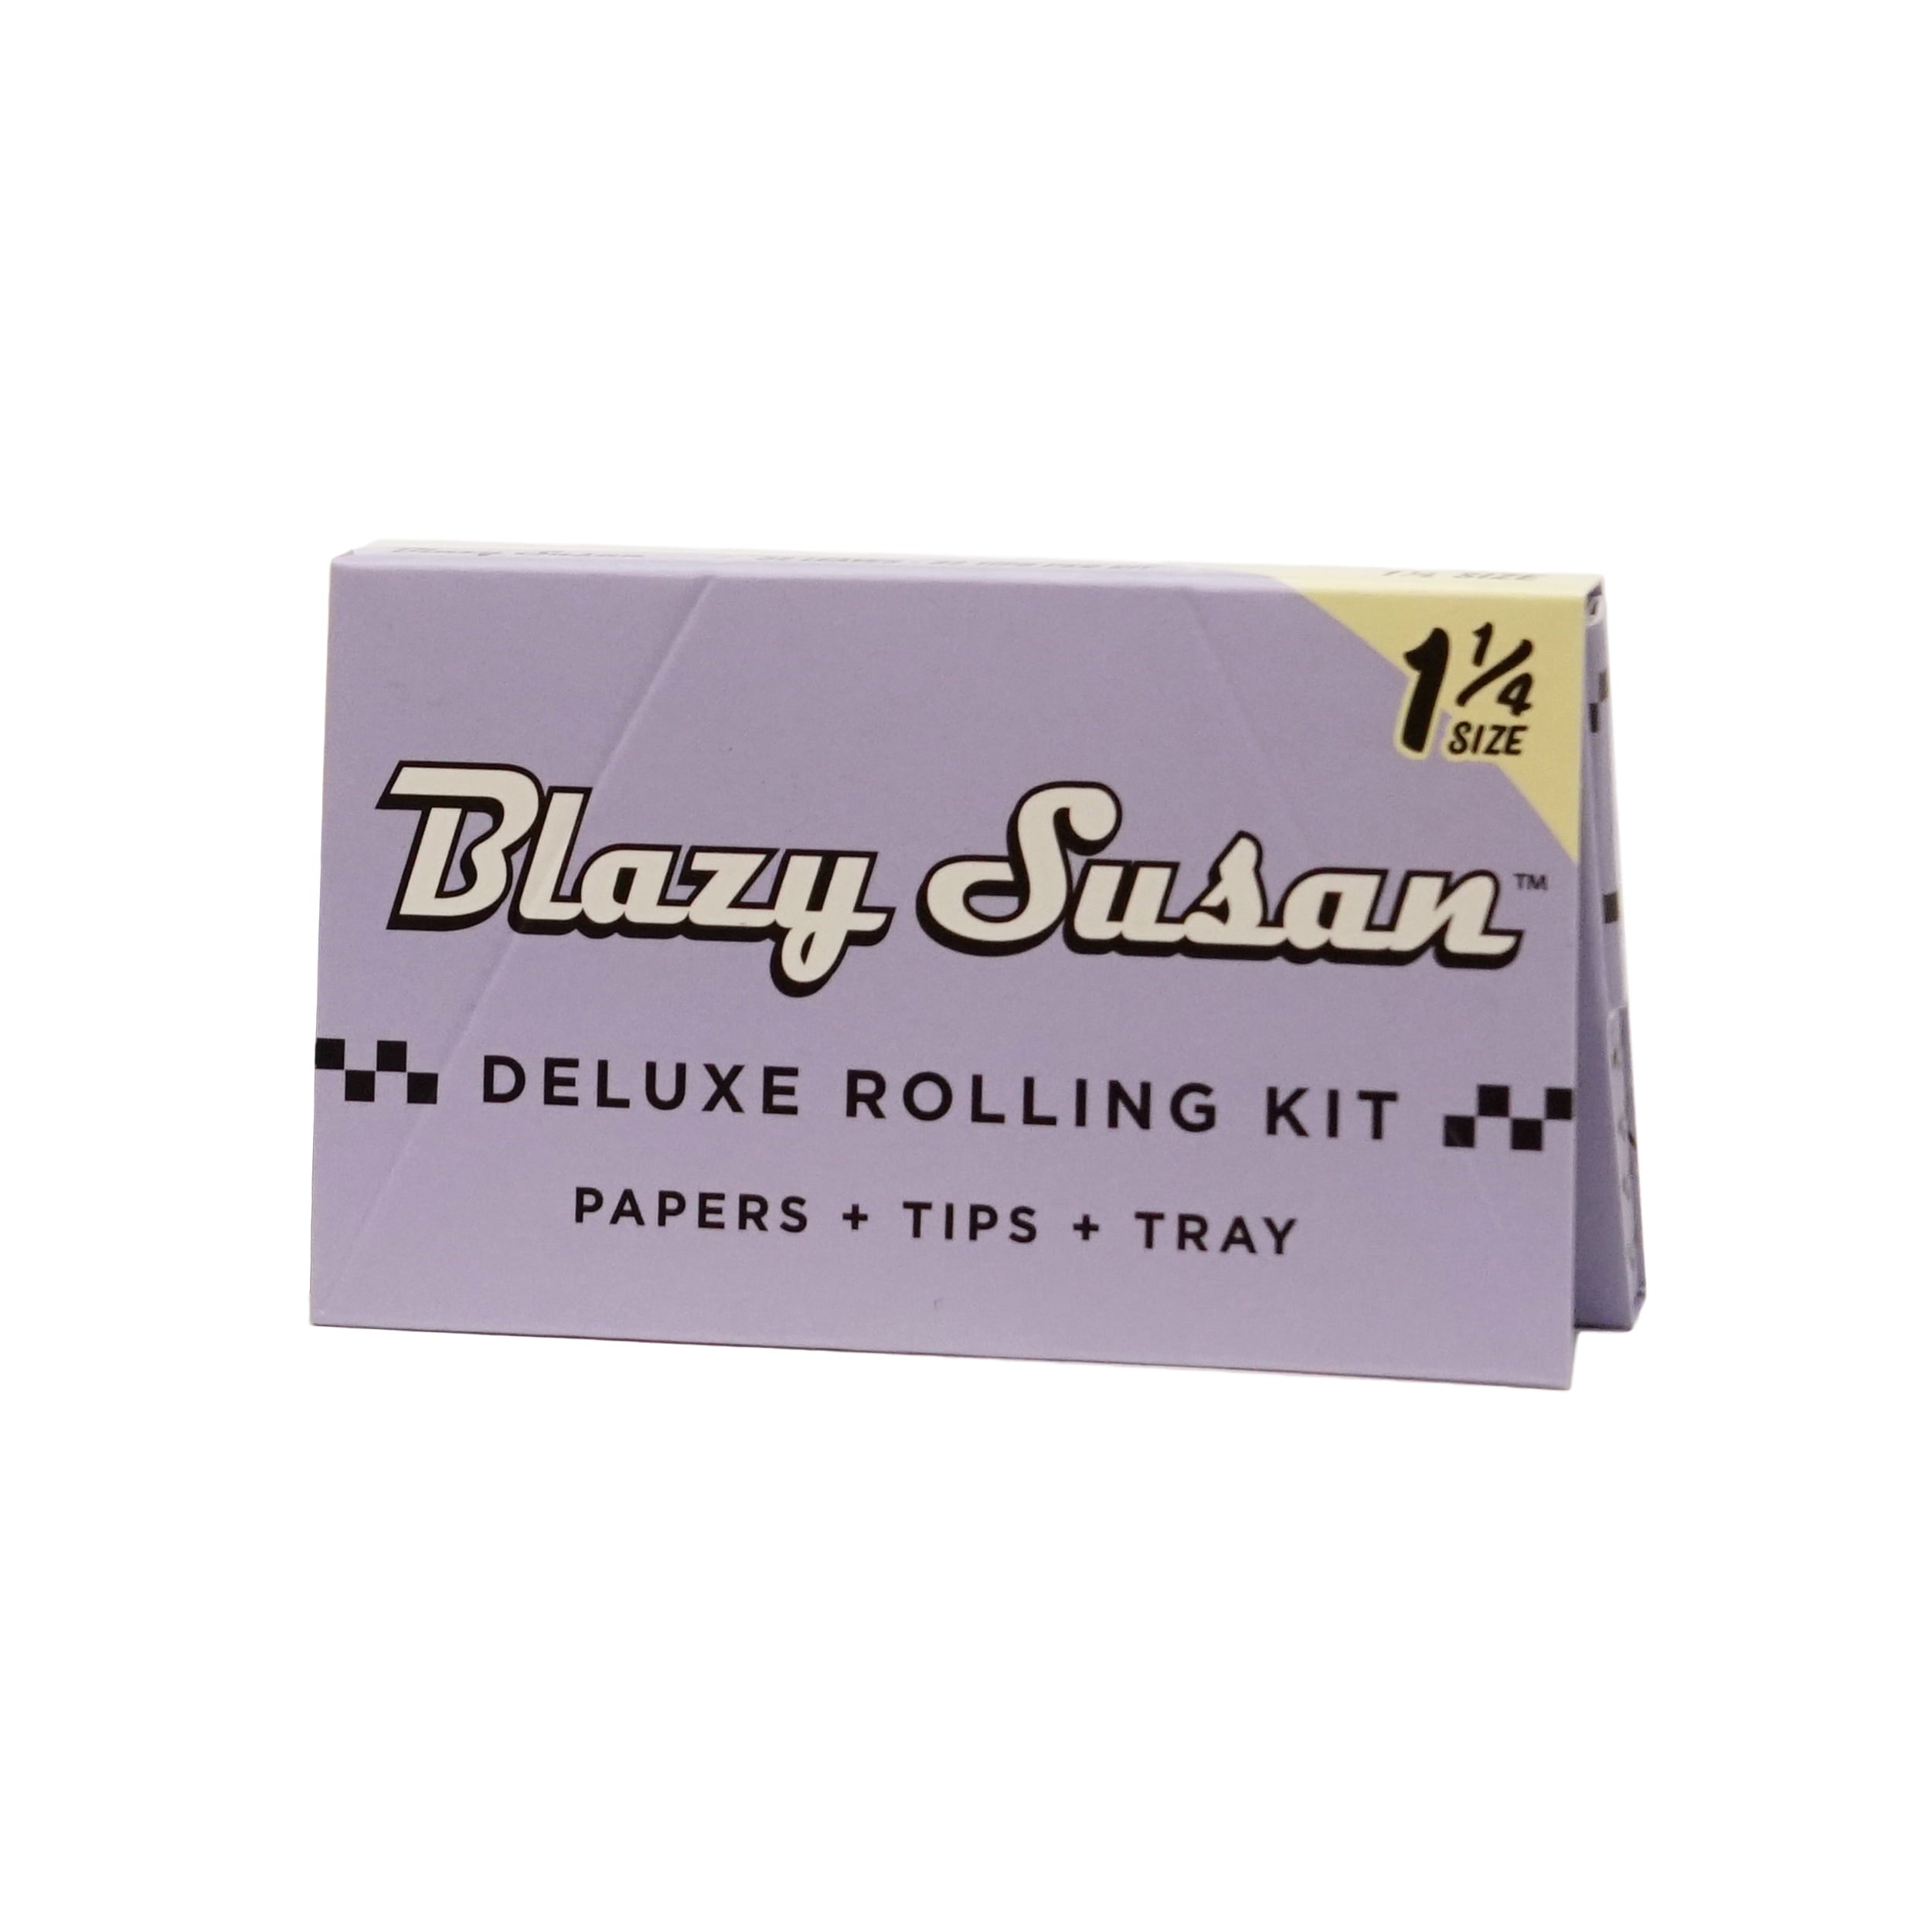 BLAZY SUSAN 1 ¼ DELUXE ROLLING KIT FULL BOX | 20 PK